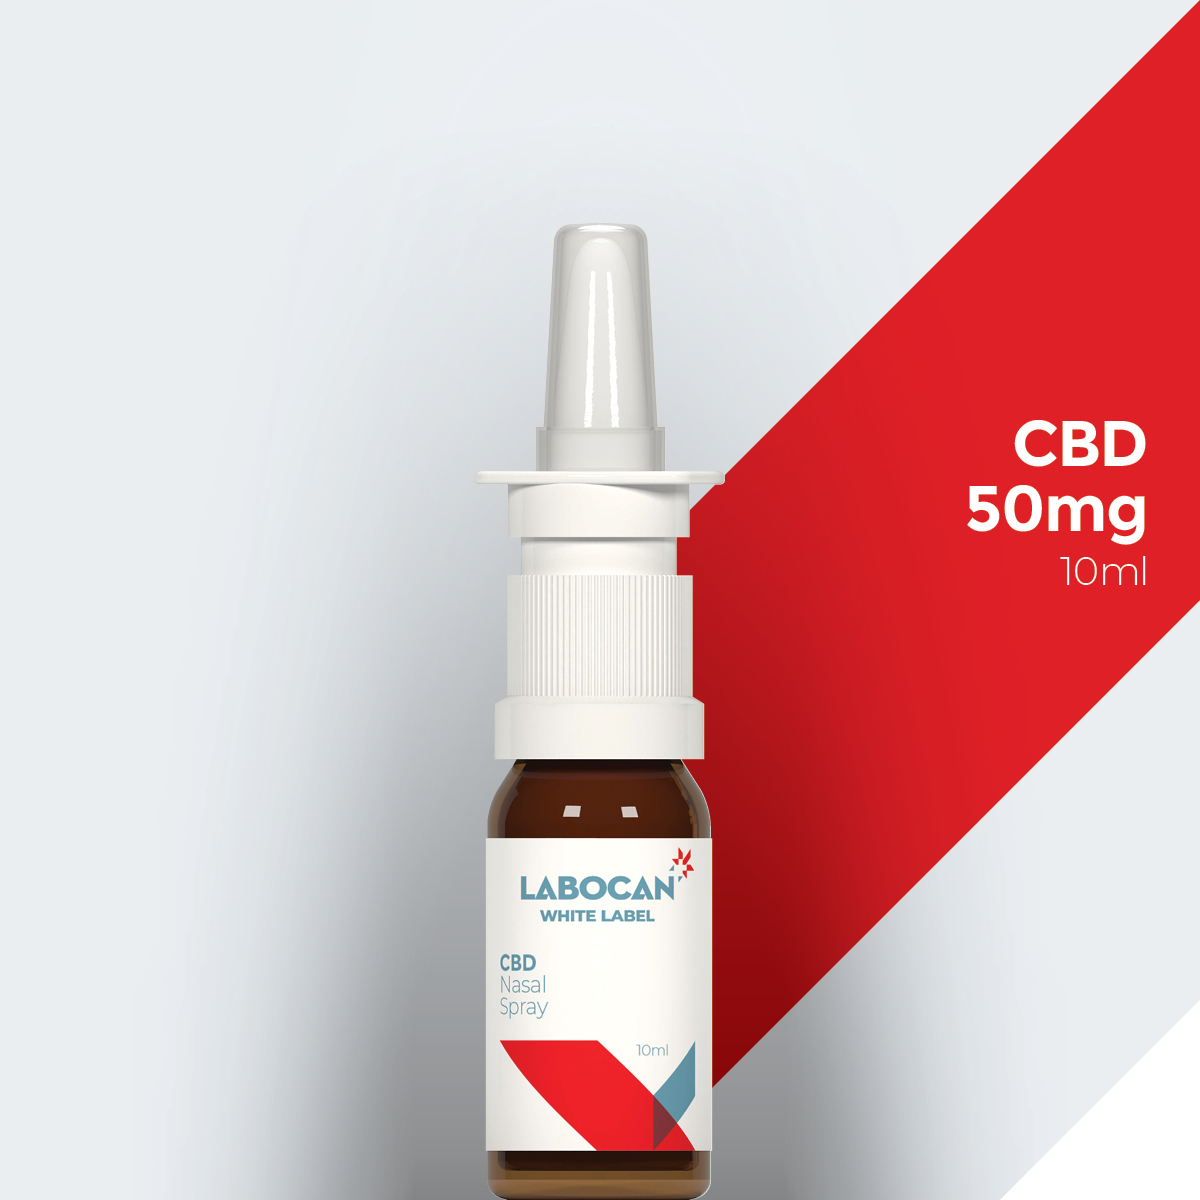 Labocan White Label CBD Nasal Spray